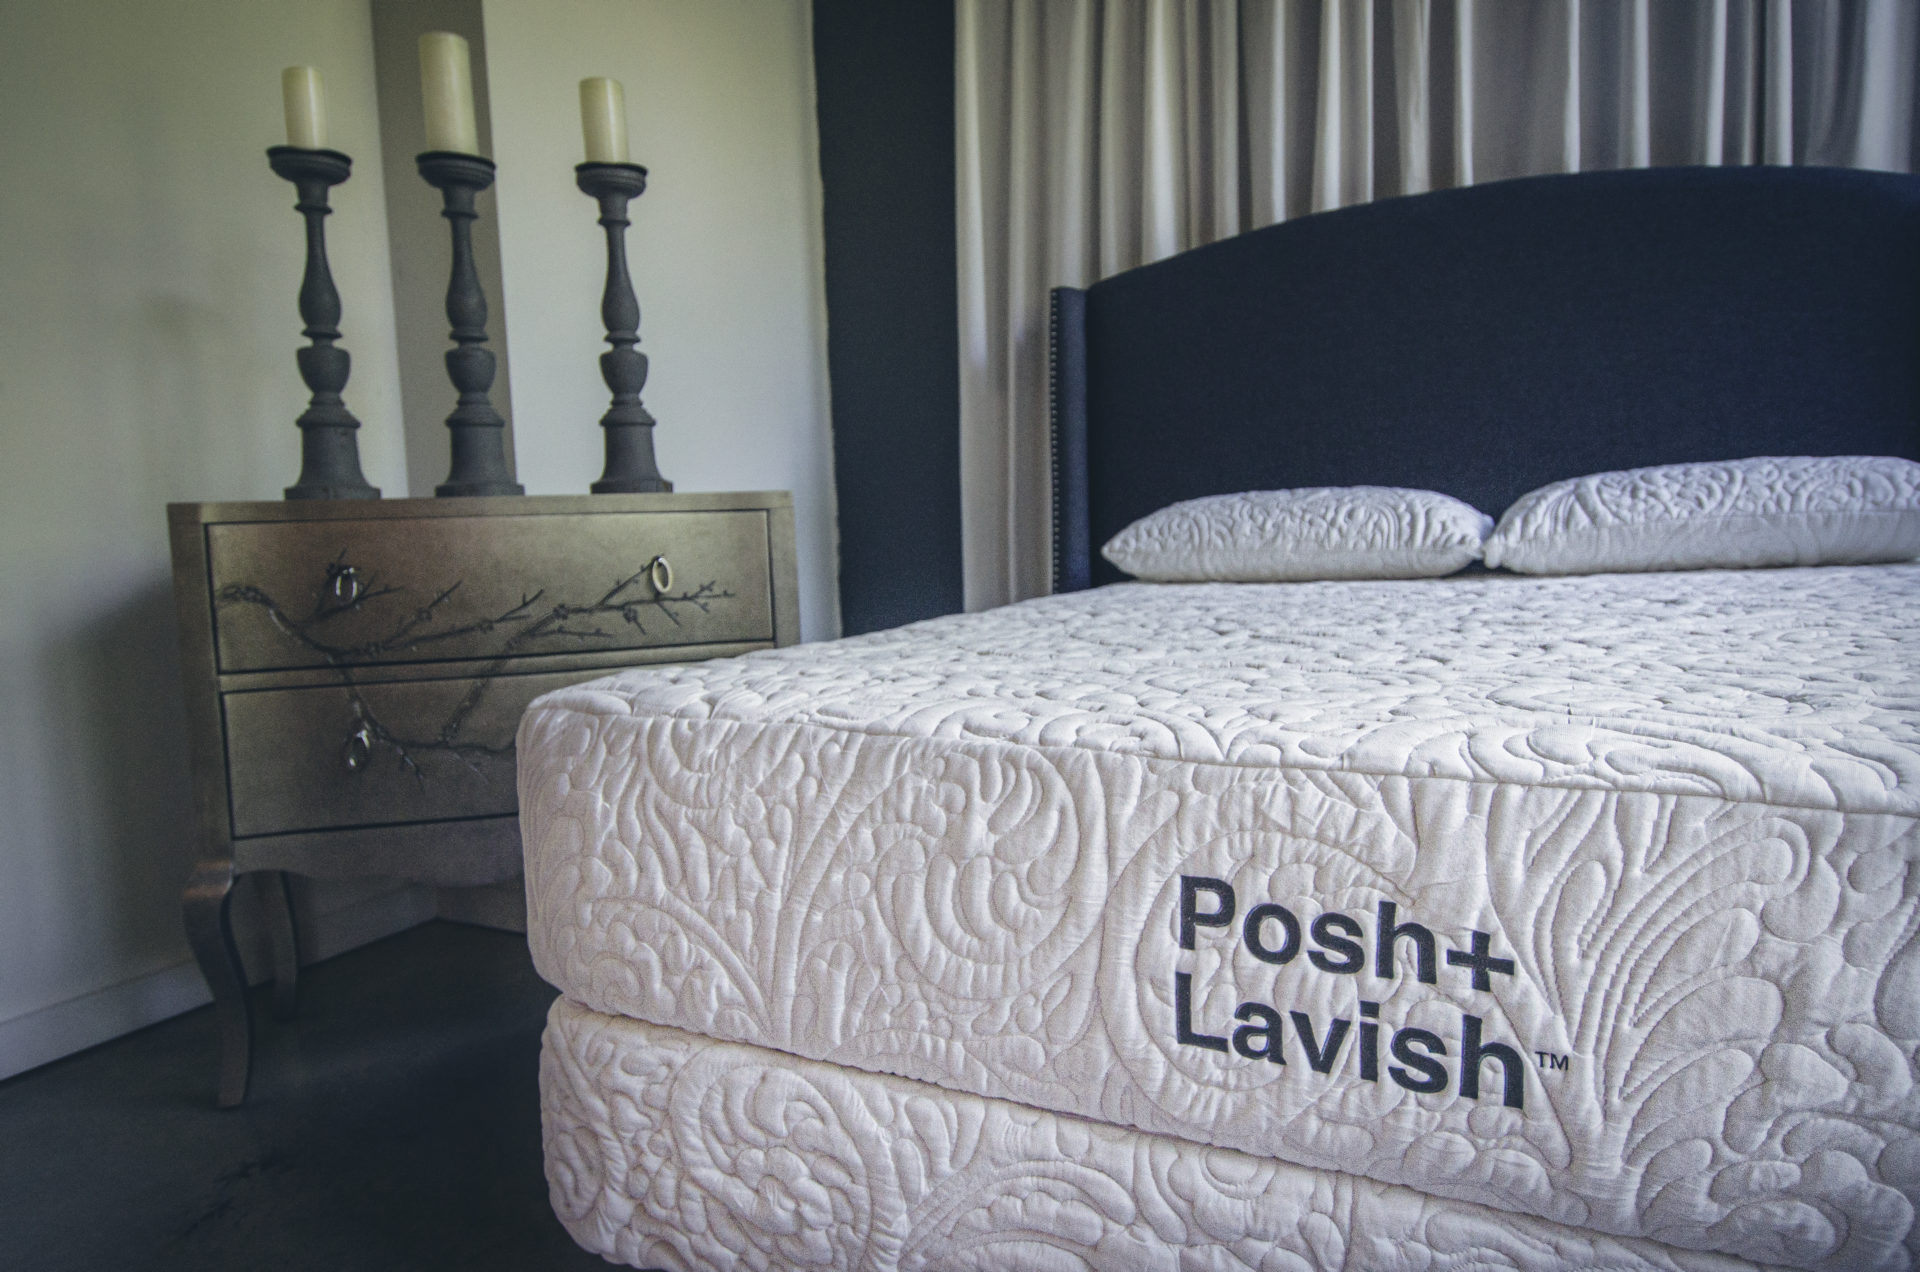 Posh & Lavish Reveal mattress